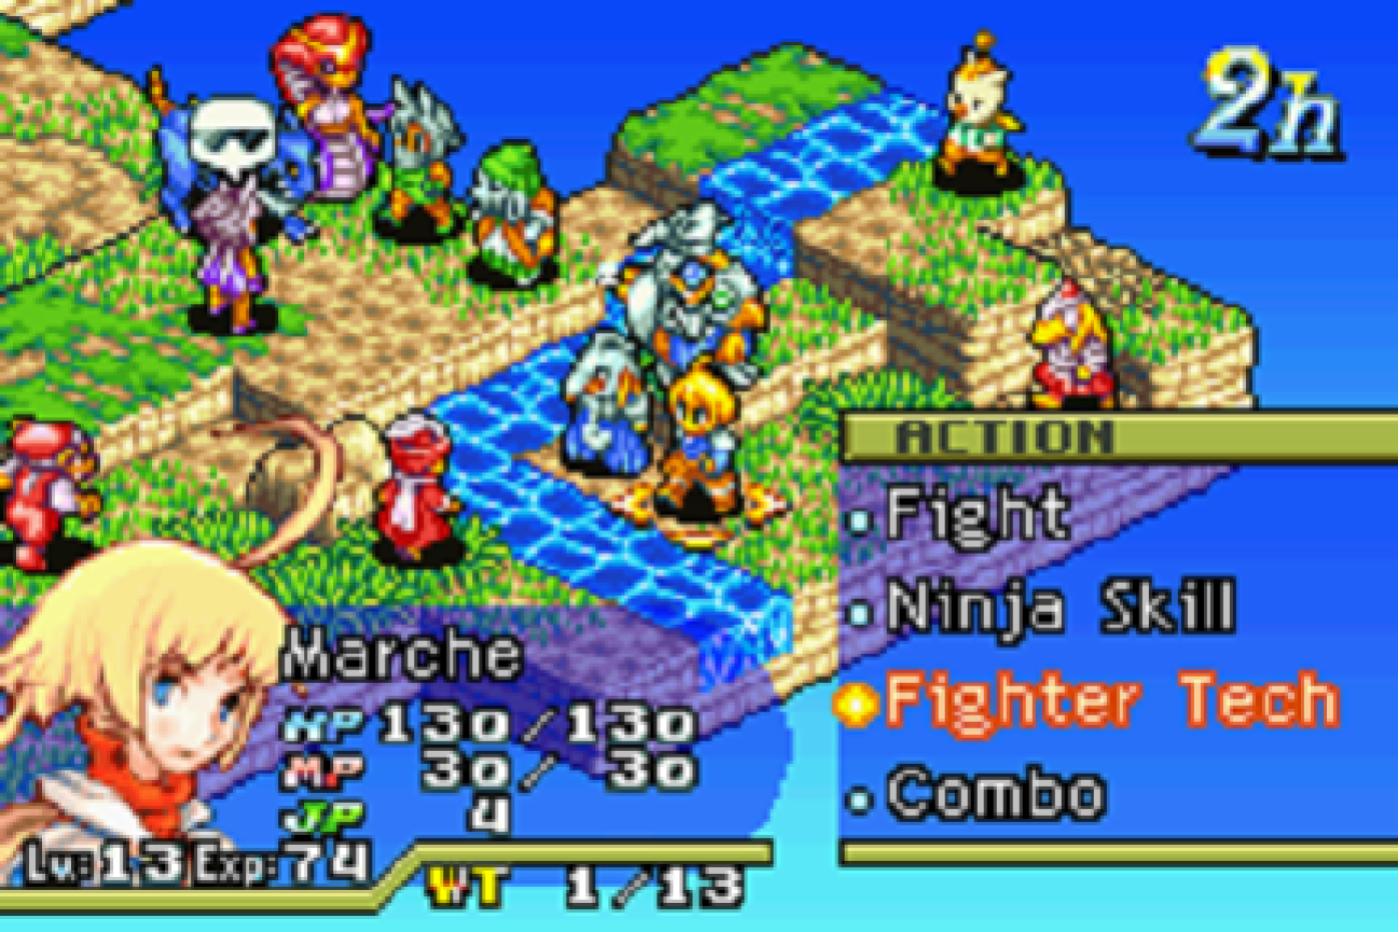 Screenshot of FF Tactics in battle